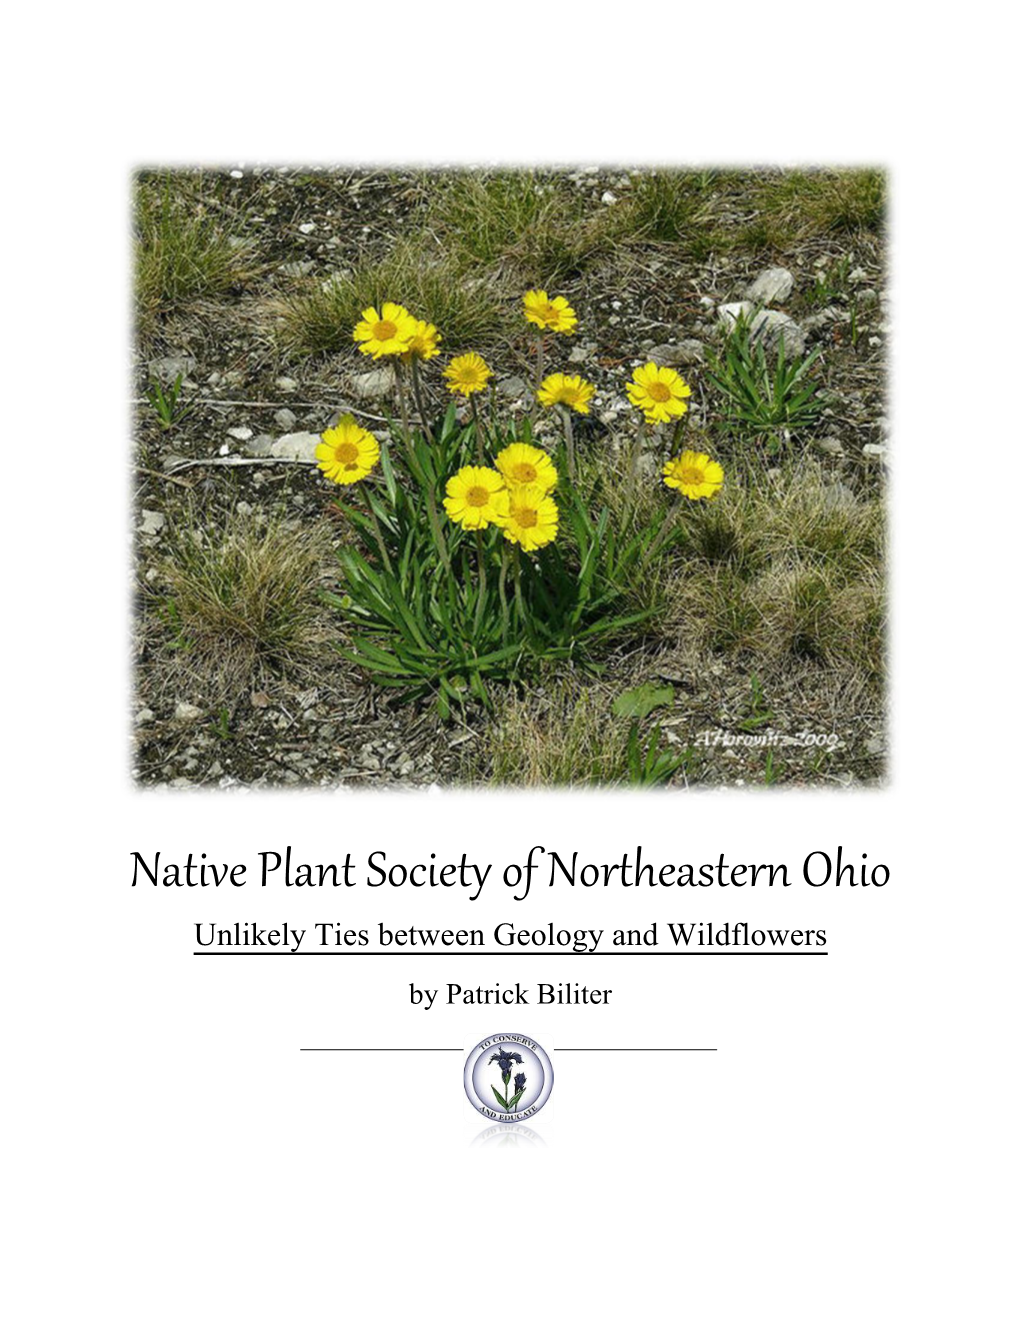 The Native Plant Society of Northeastern Ohio